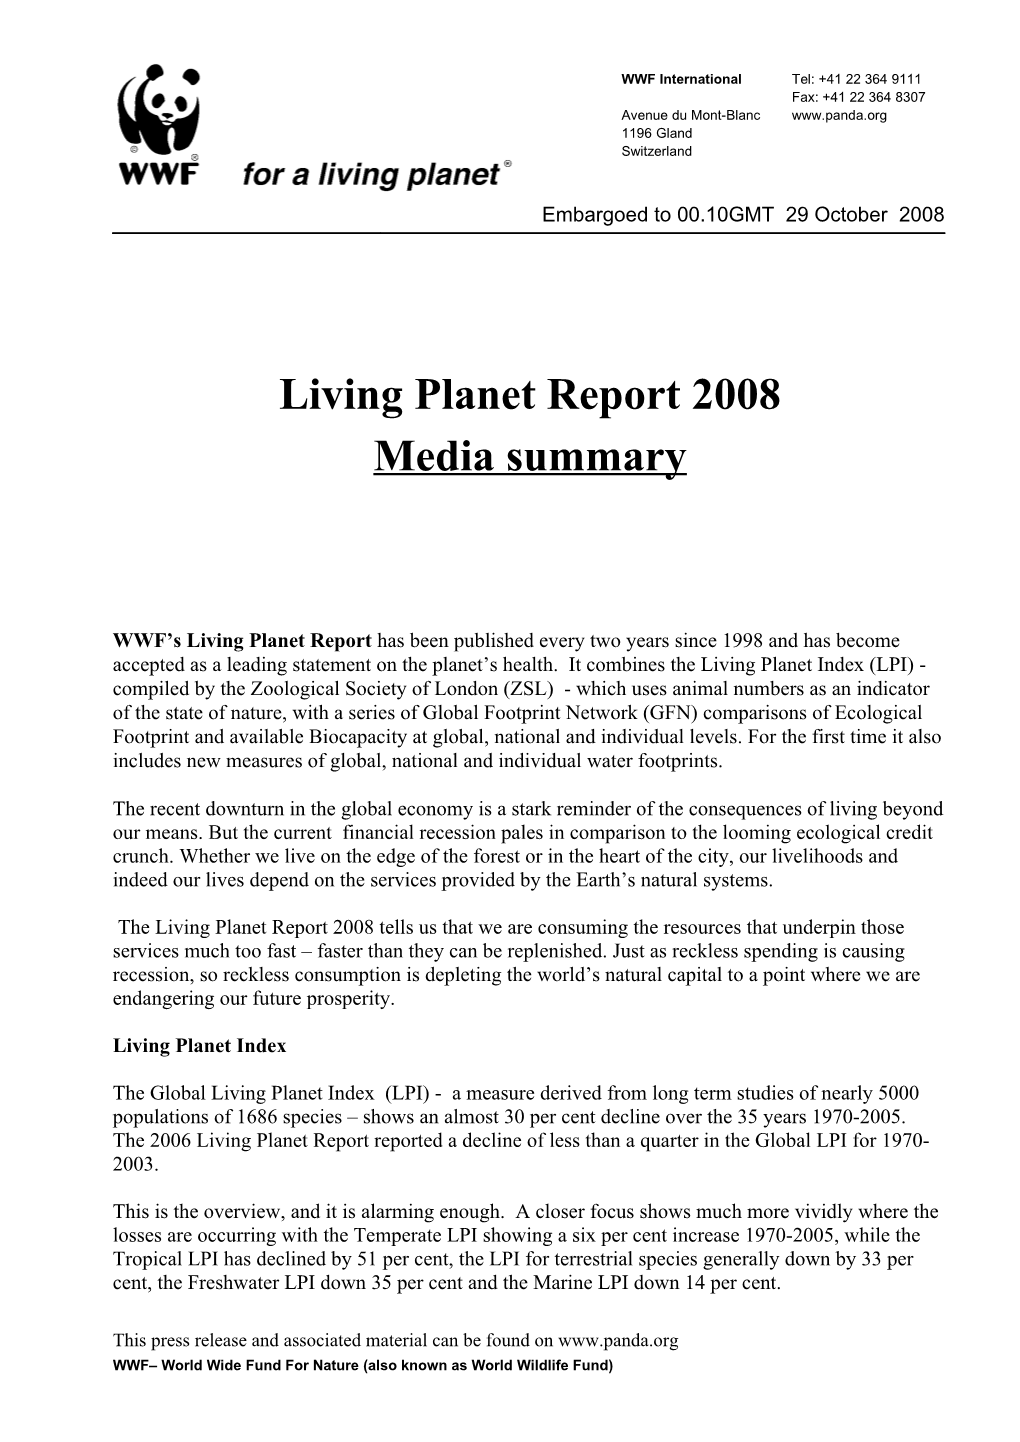 Living Planet Report 2008